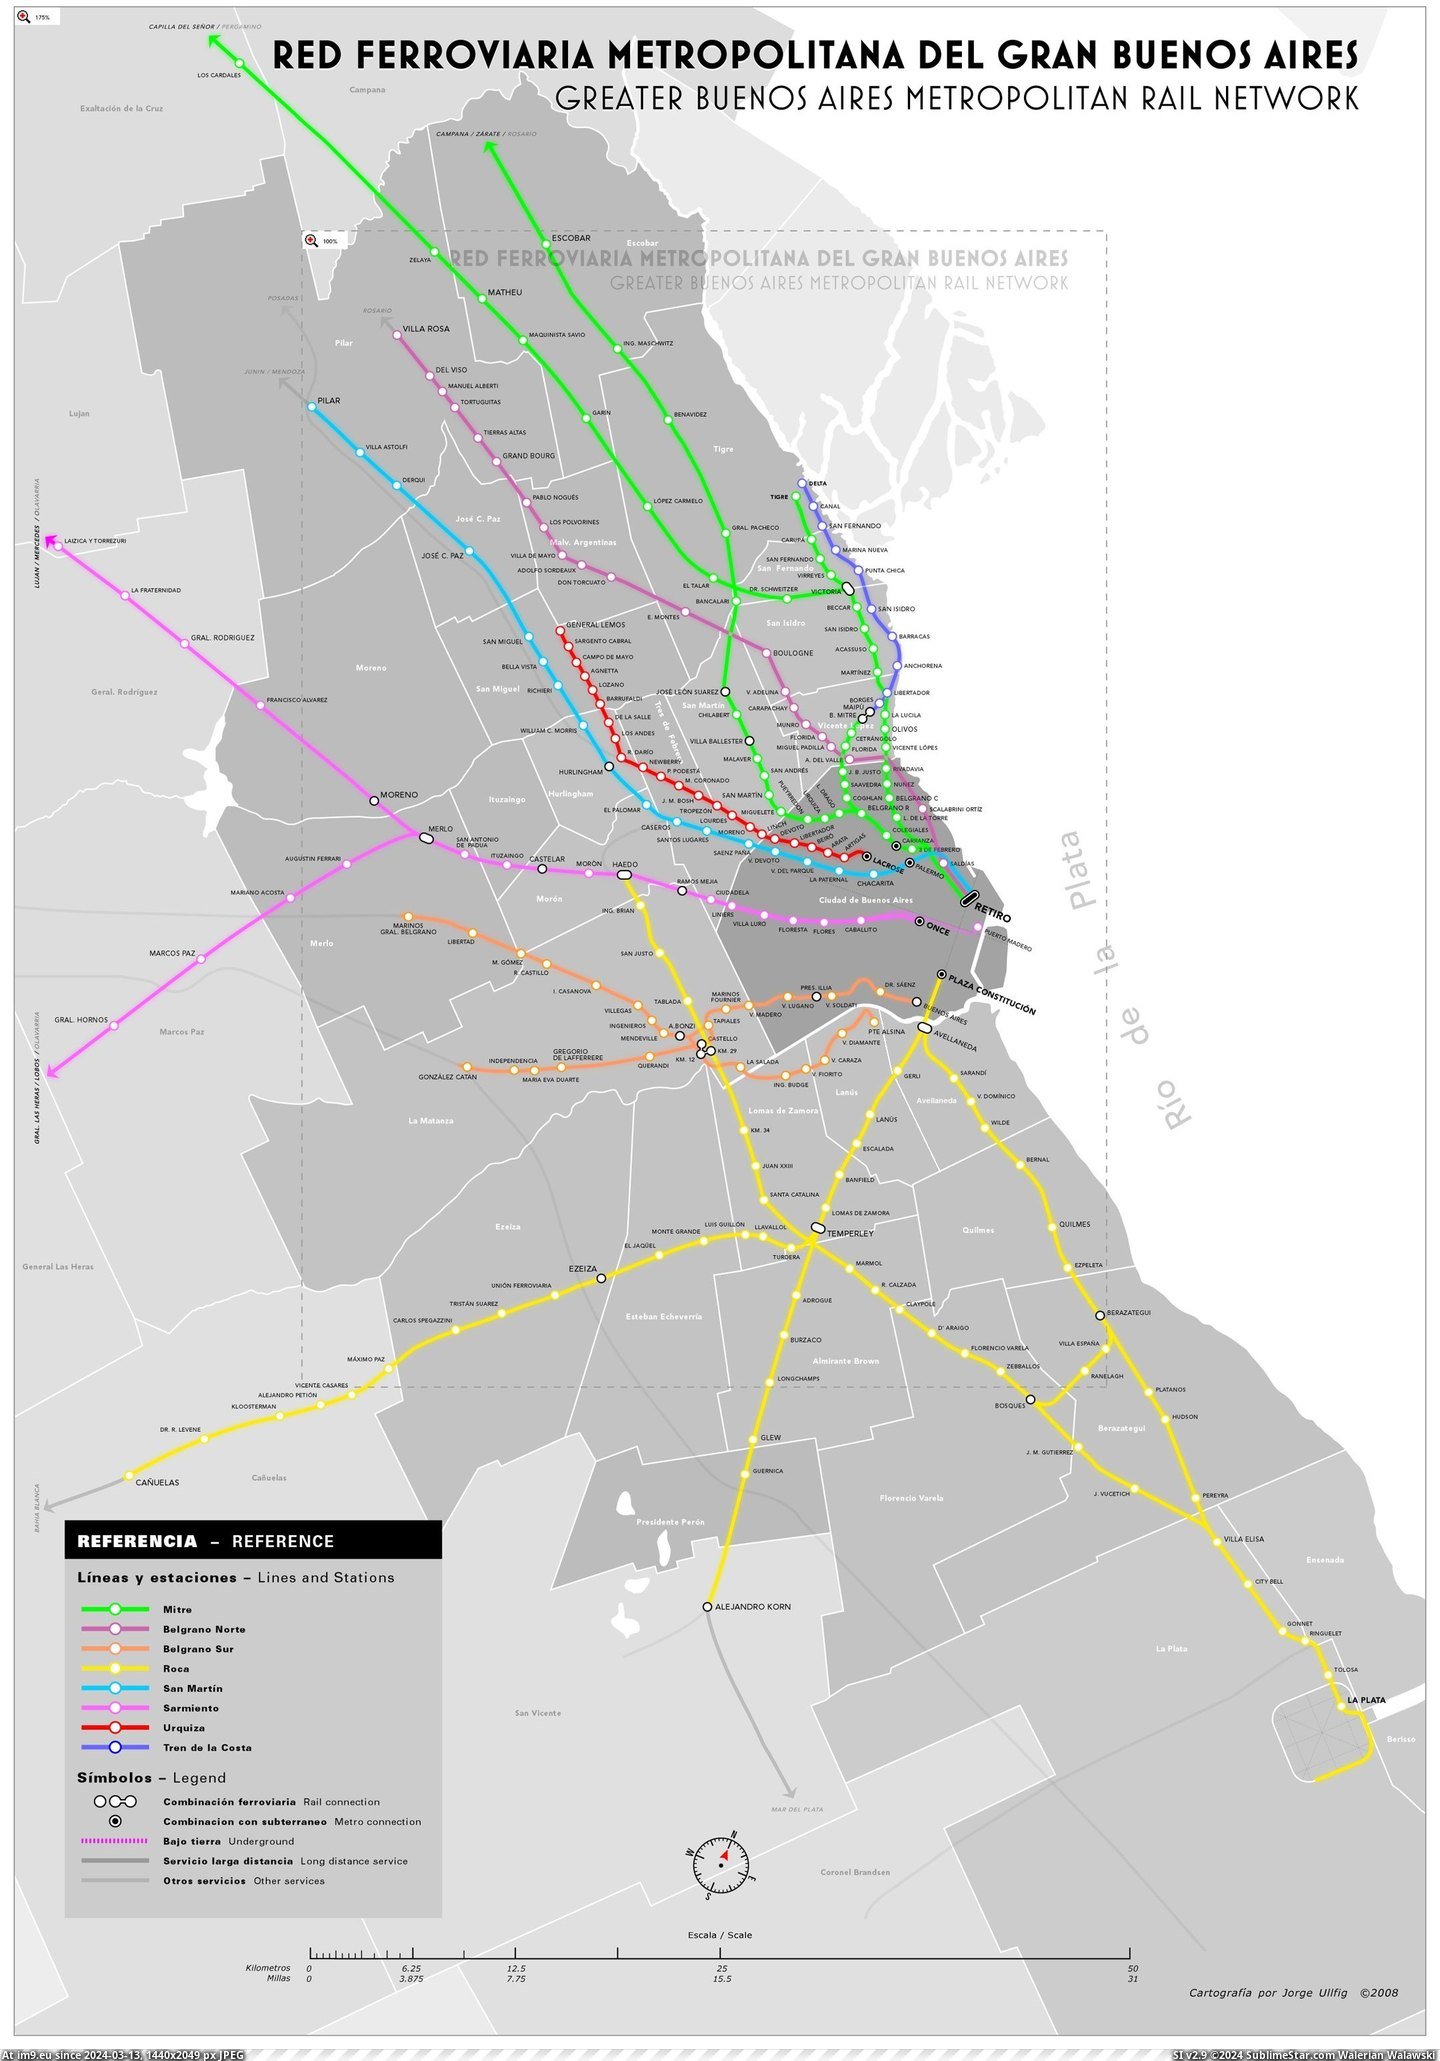 #Metropolitan #Network #Buenos #Aires #Rail #Greater [Mapporn] Greater Buenos Aires Metropolitan Rail Network [2160x3086] Pic. (Изображение из альбом My r/MAPS favs))